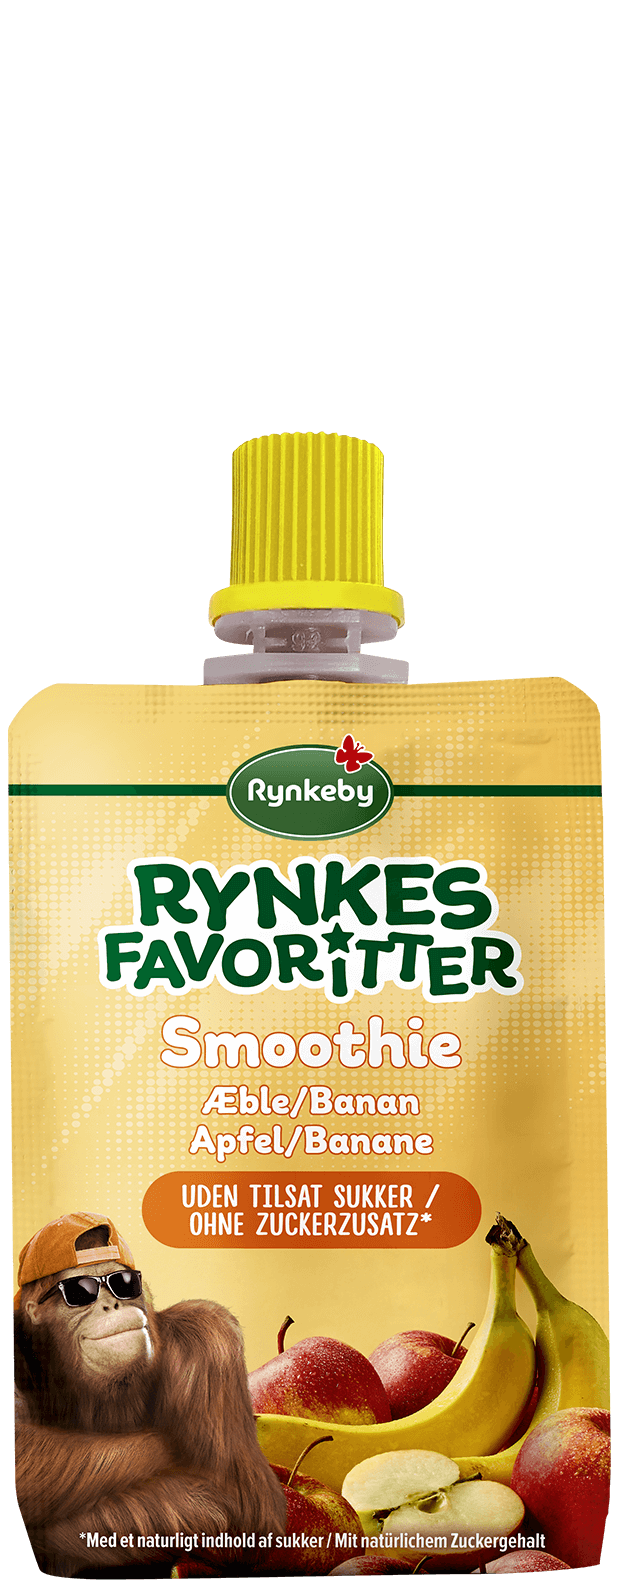 Rynkes Favoritter Aeble/Banan Smoothie 